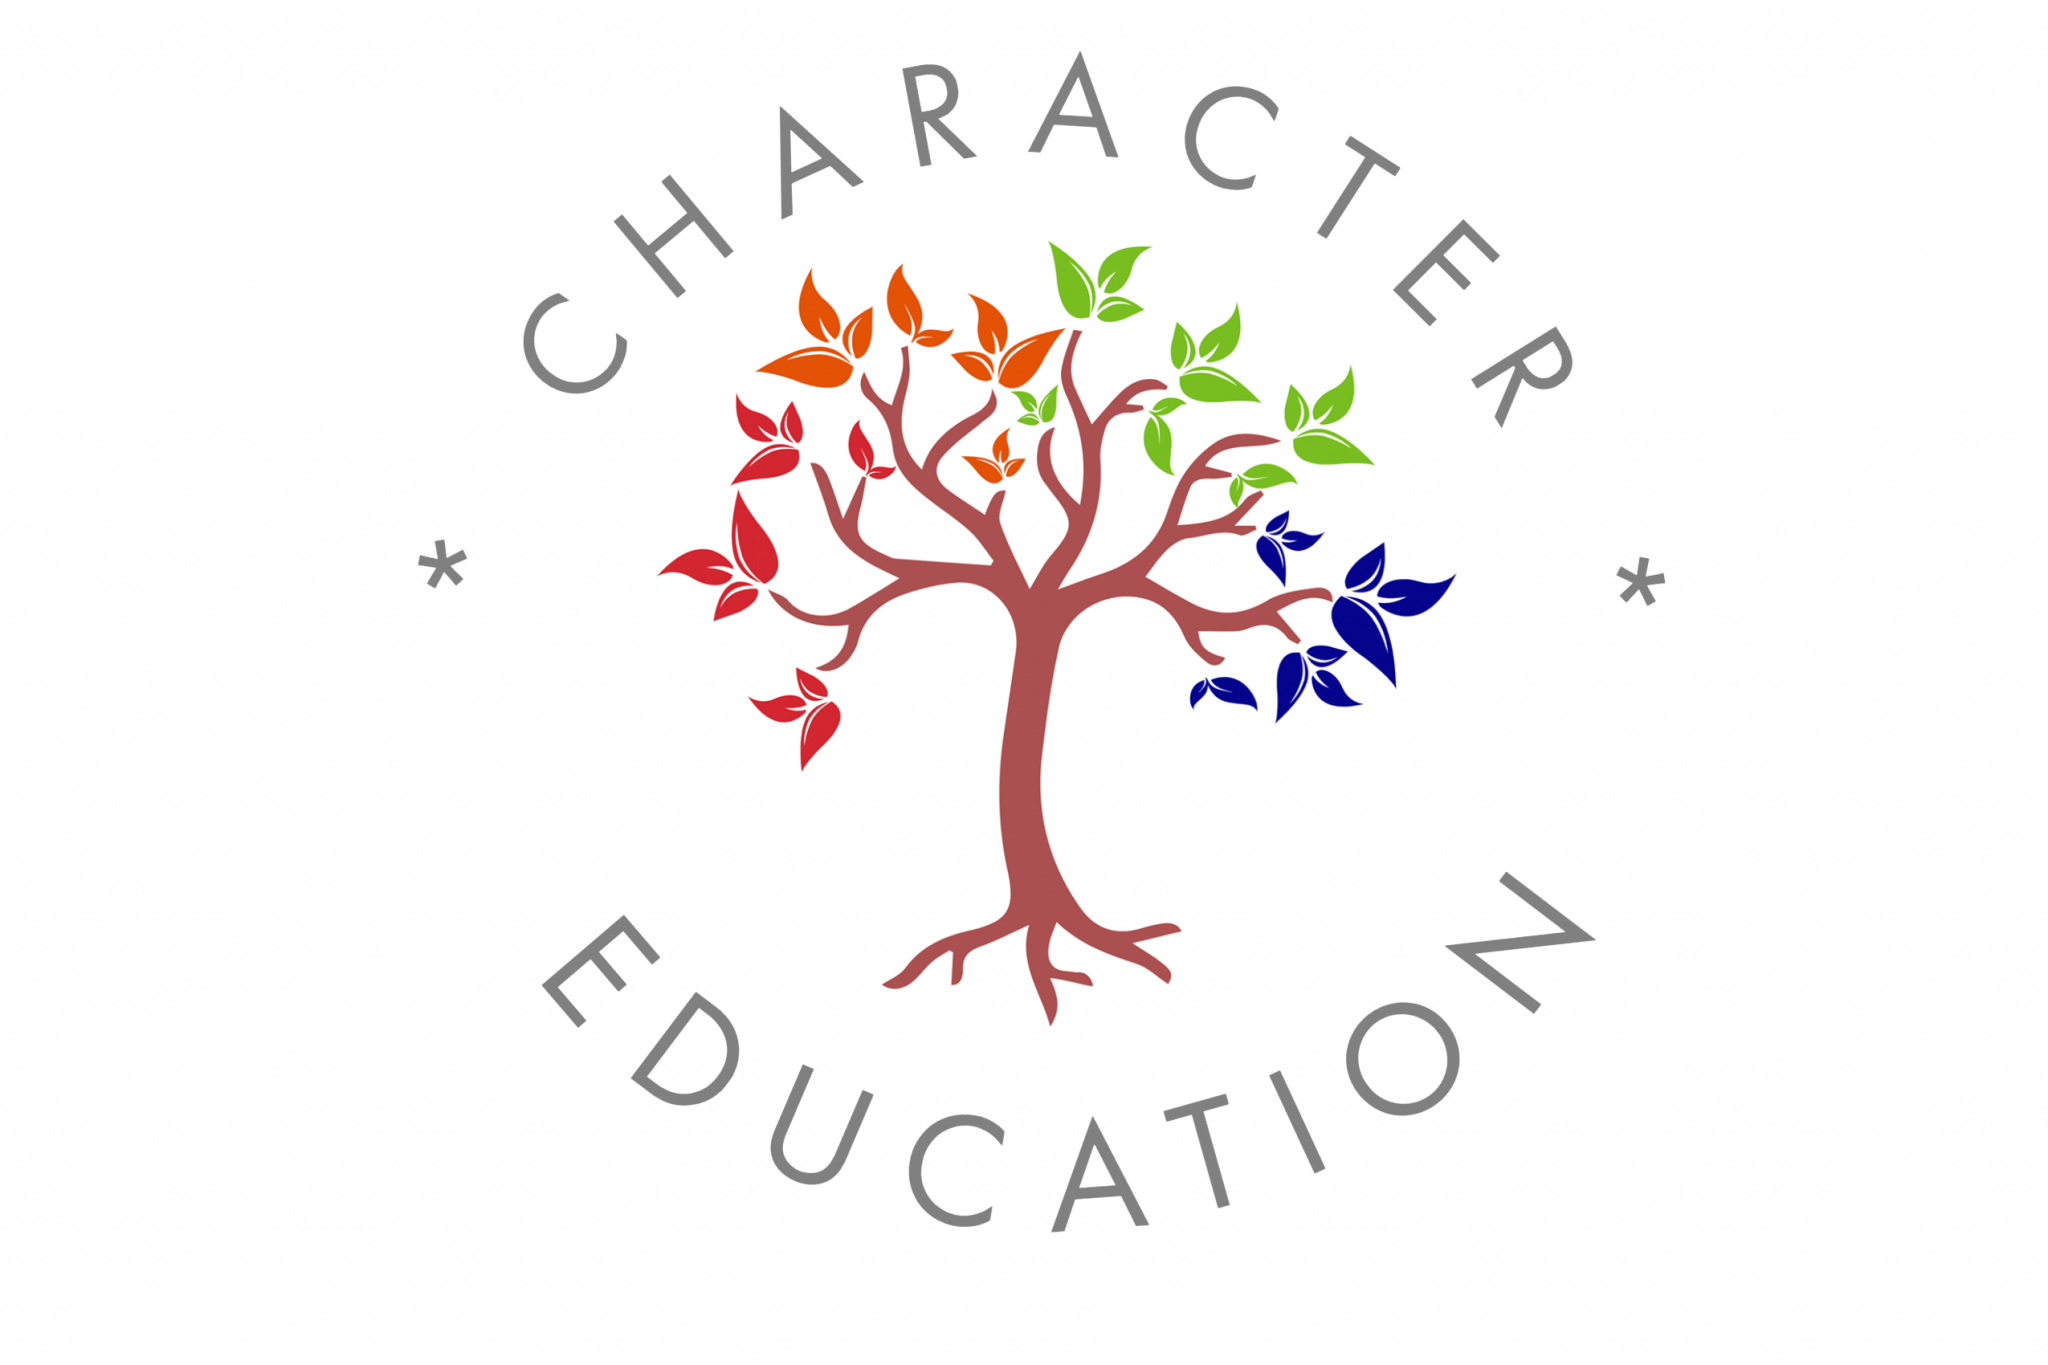 character education essay